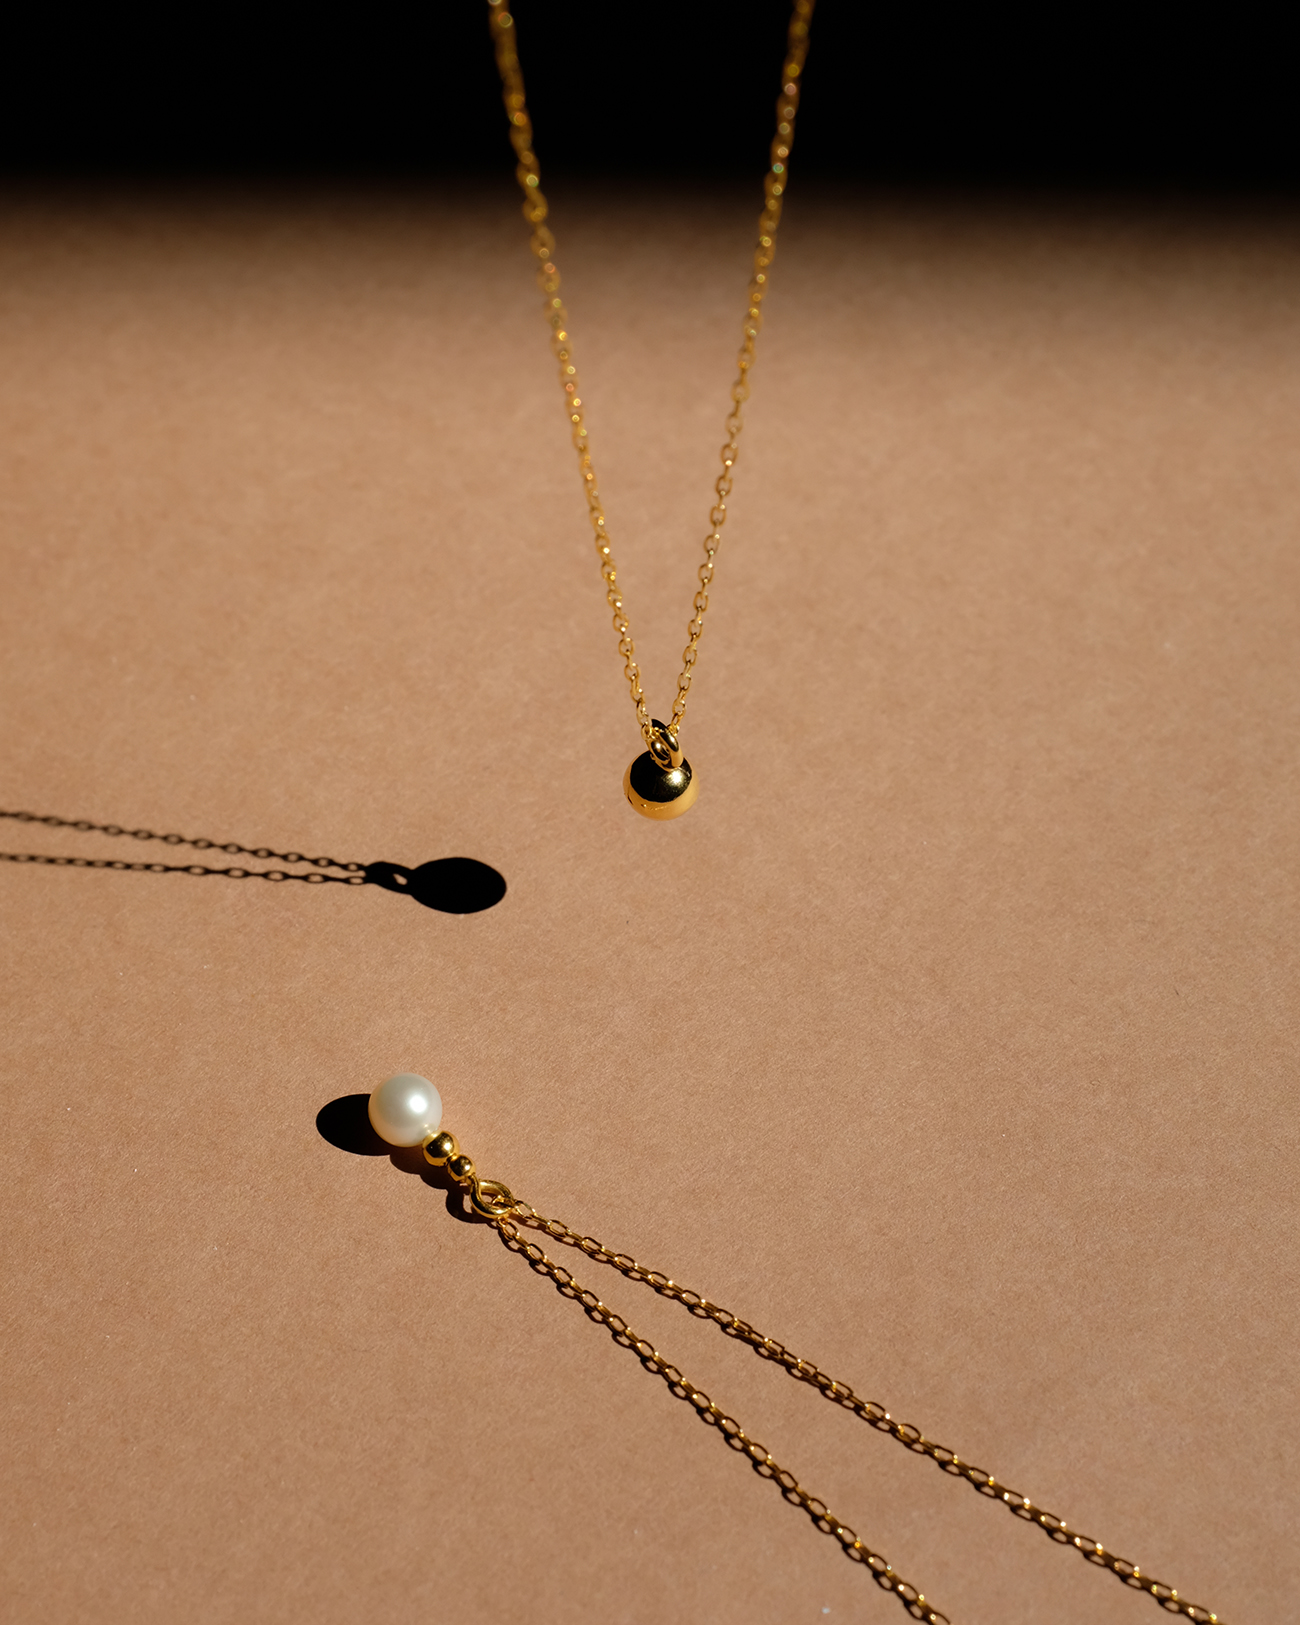 metaformi_design_jewelry_gold_ball_necklace_3